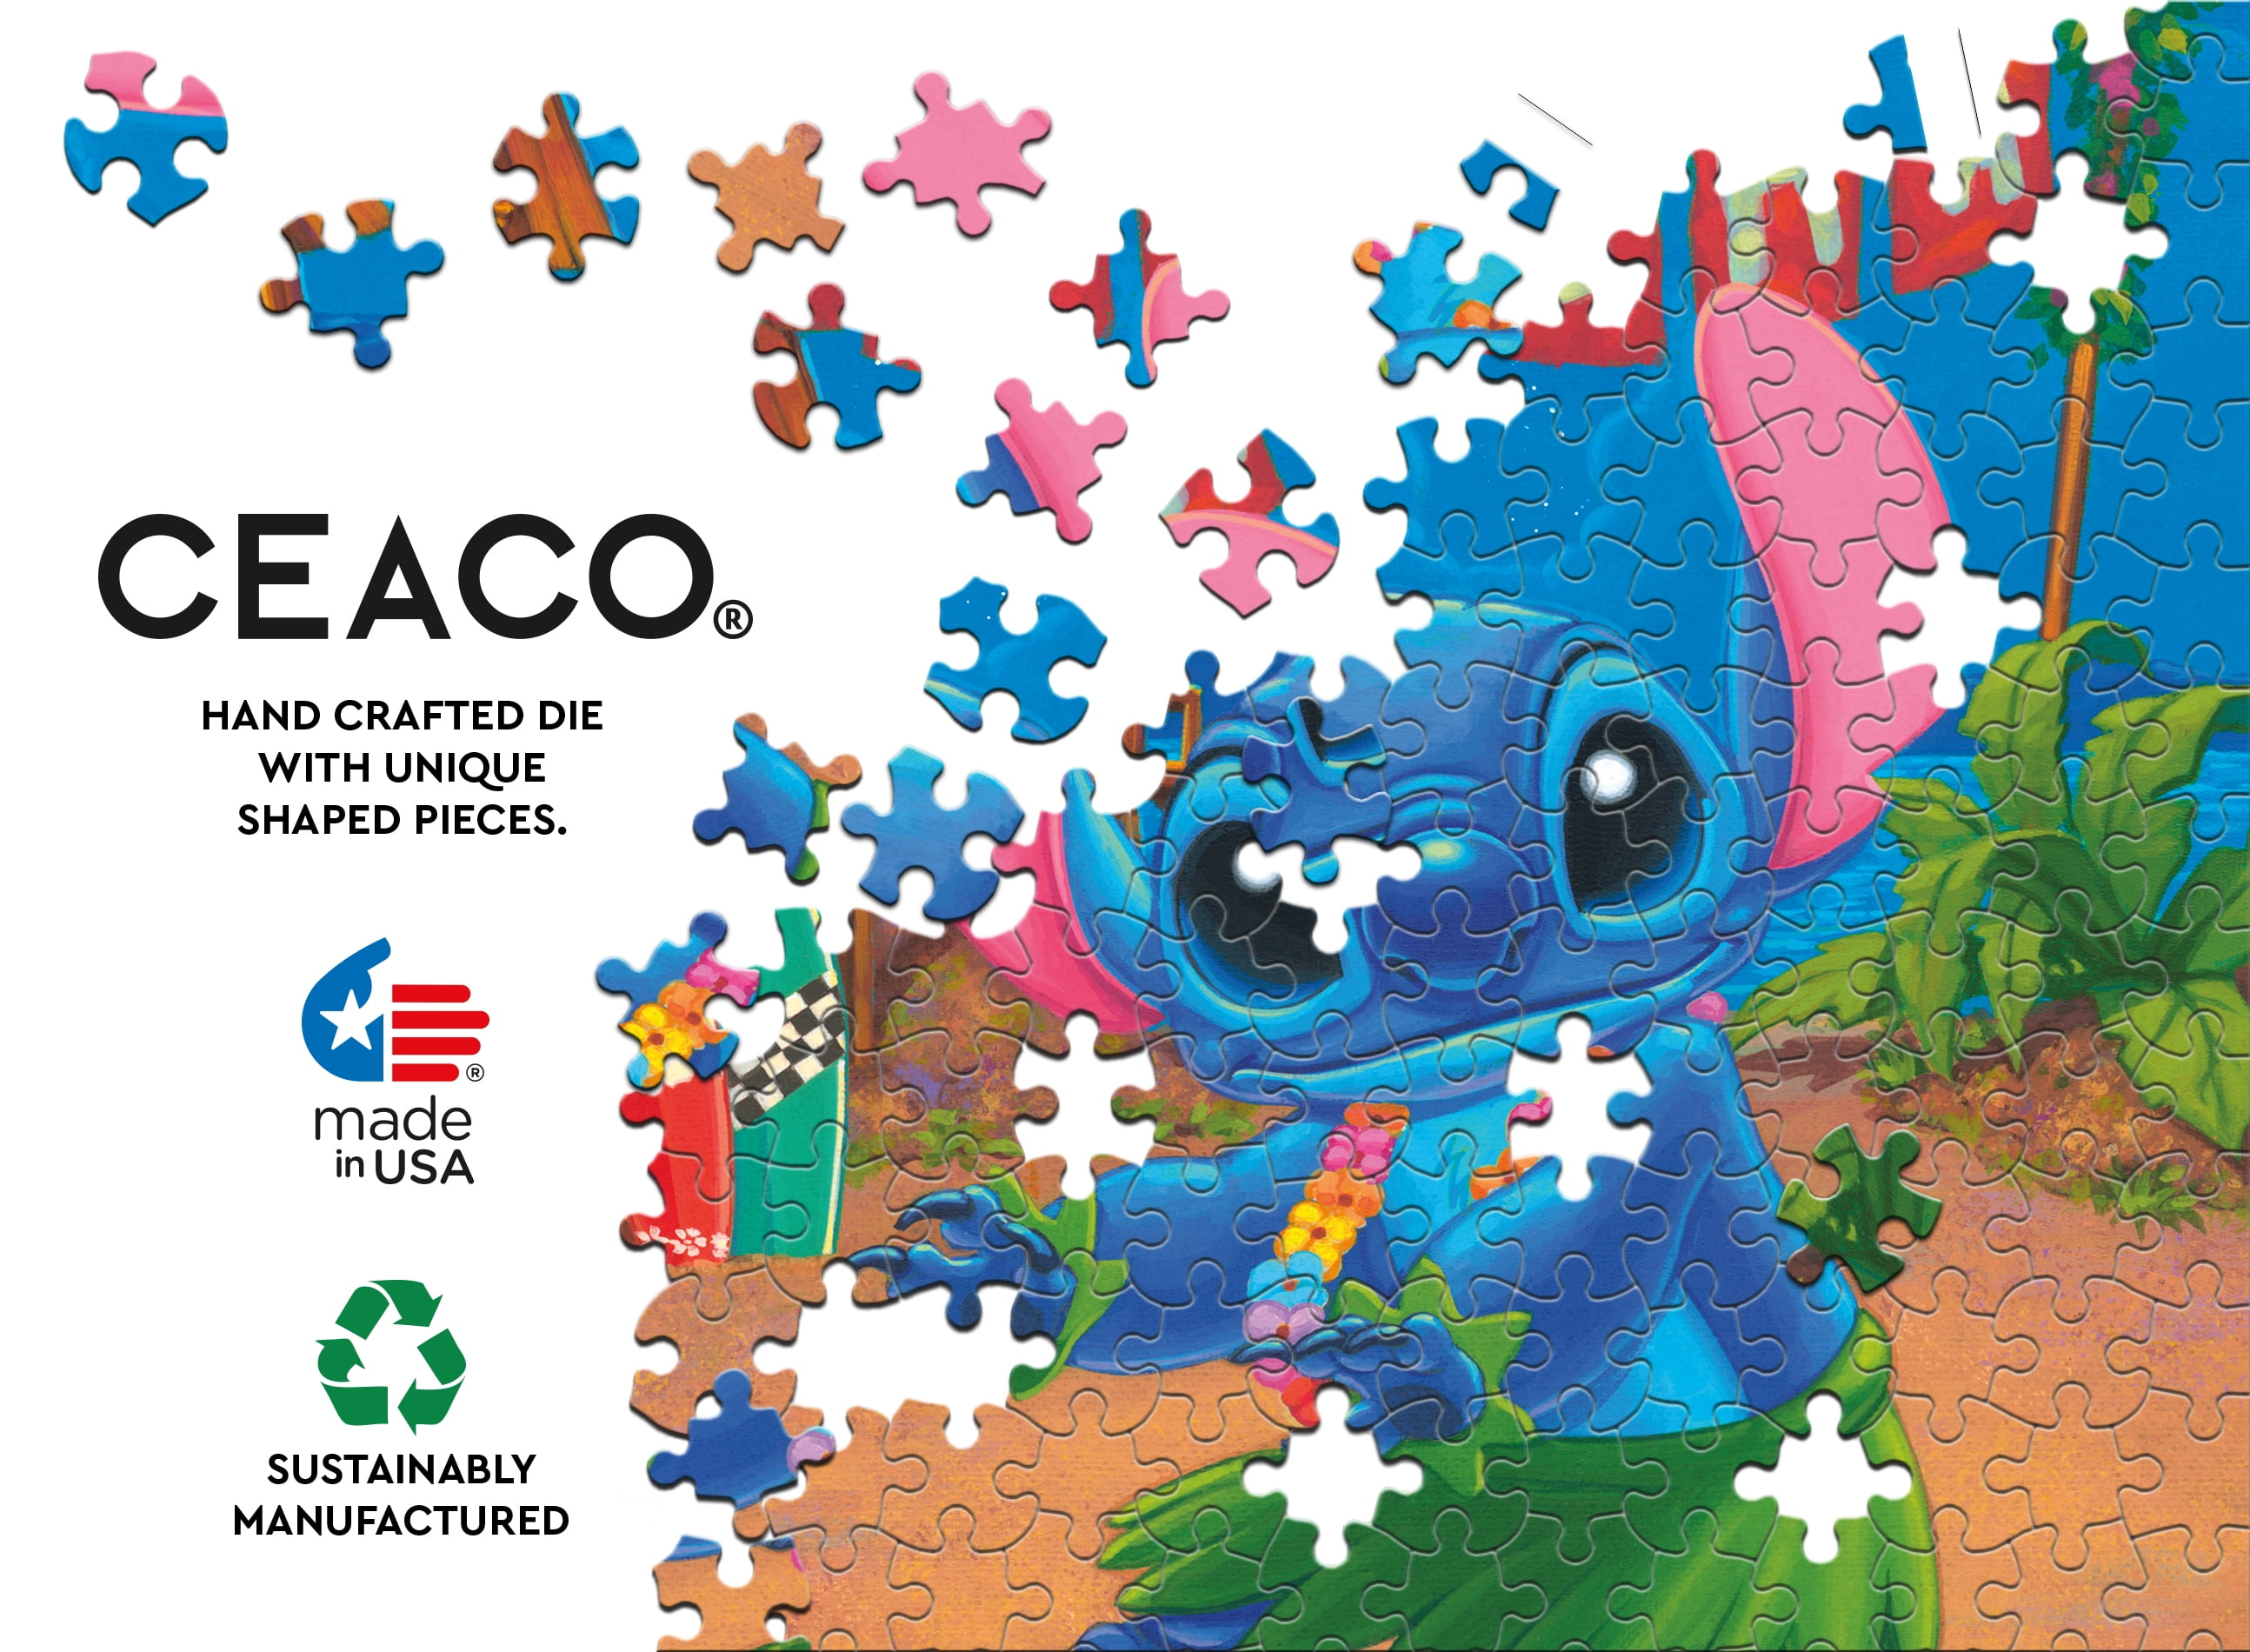 Ceaco Disney Lilo and Stitch Three Interlocking Jigsaw Puzzles 